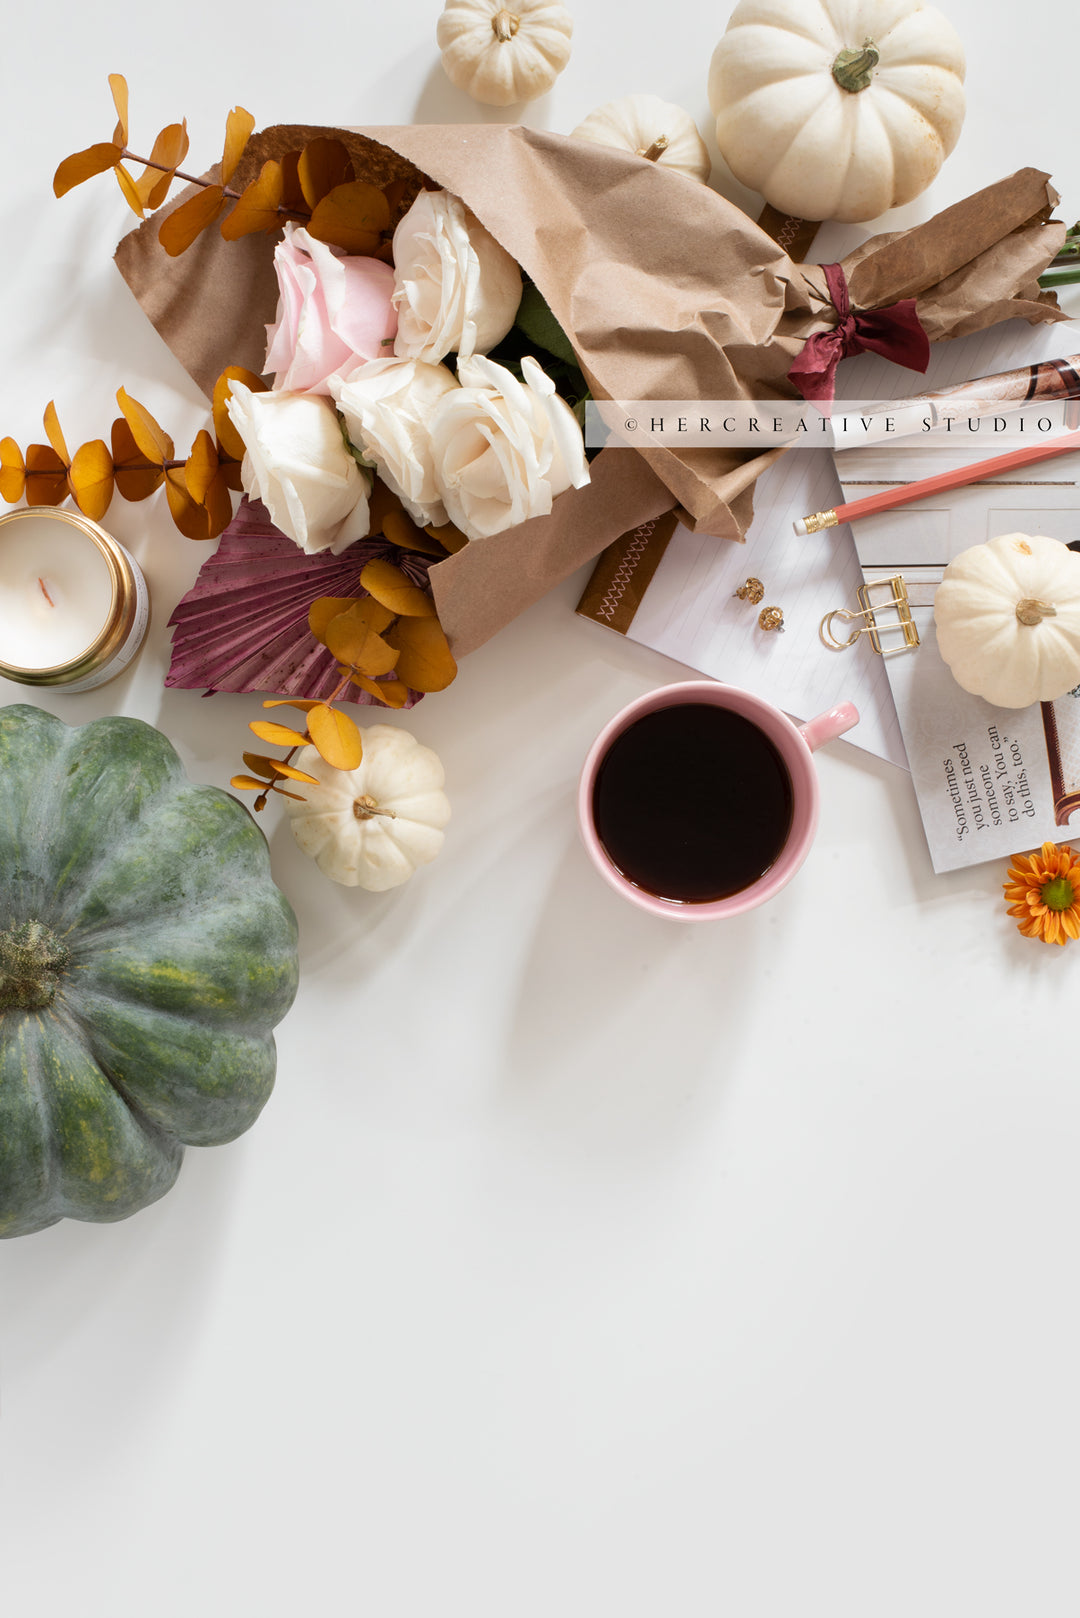 Coffee, Fall Pumpkins & Bouquet of Flowers 2. Digital Stock Image.